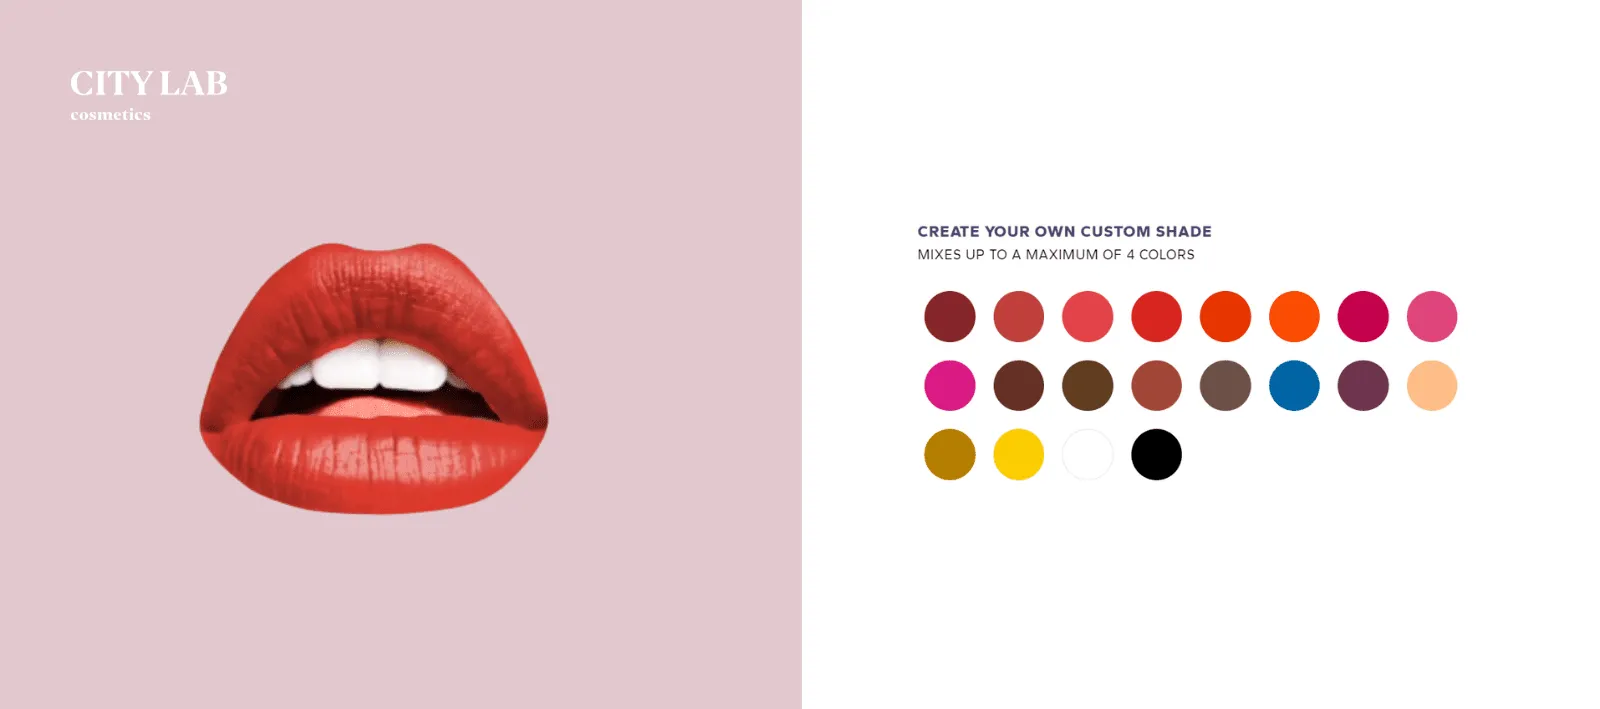 City Lab Cosmetics: Revolutionizing the virtual lipstick try-on experience